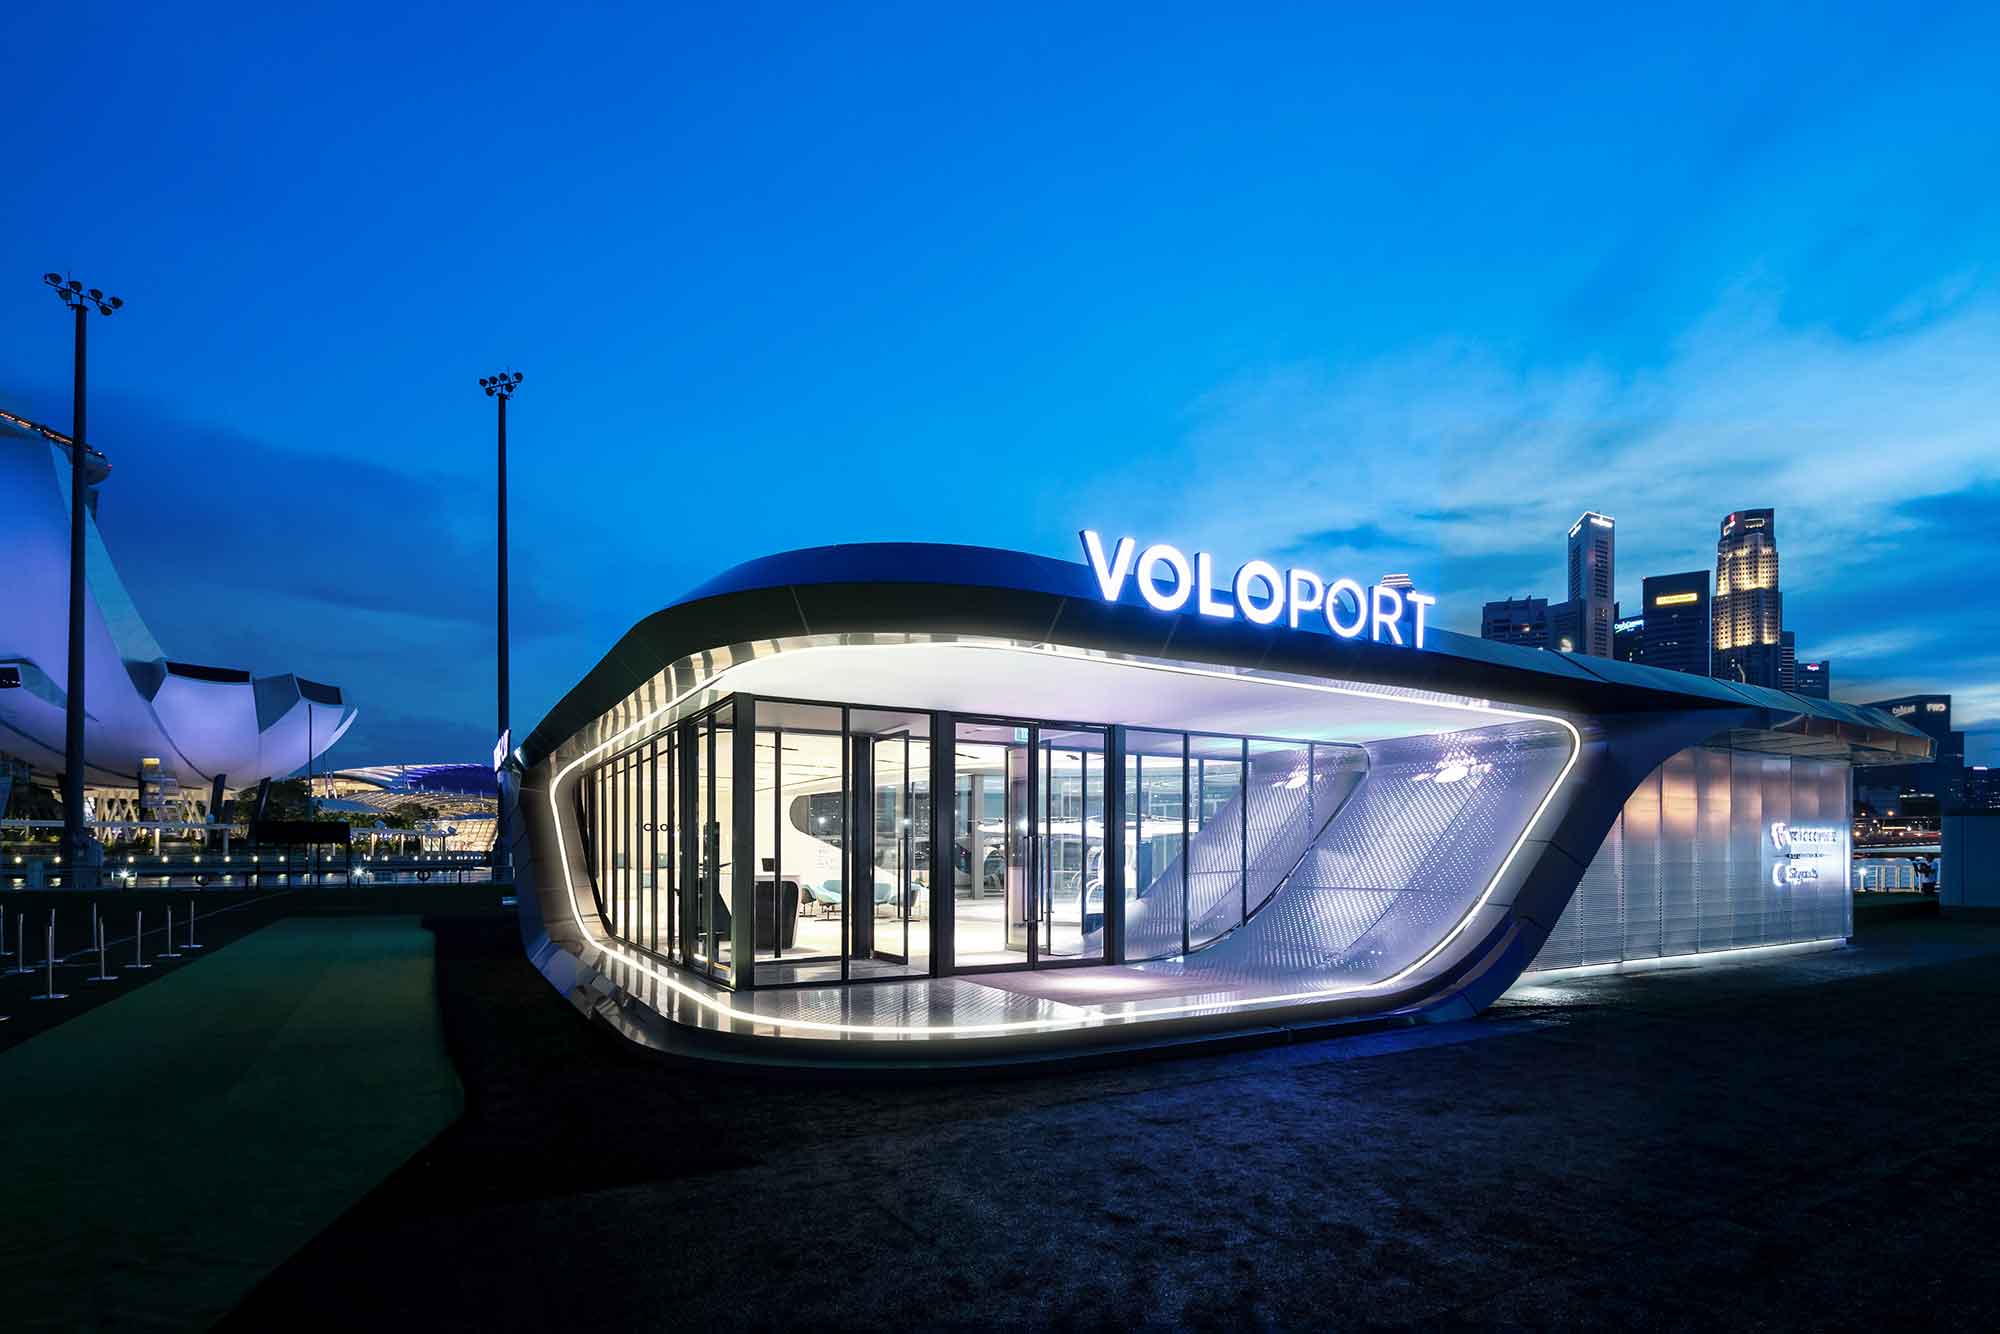 Vertiport-Prototyp für eVTOL Flugtaxis in Singapur